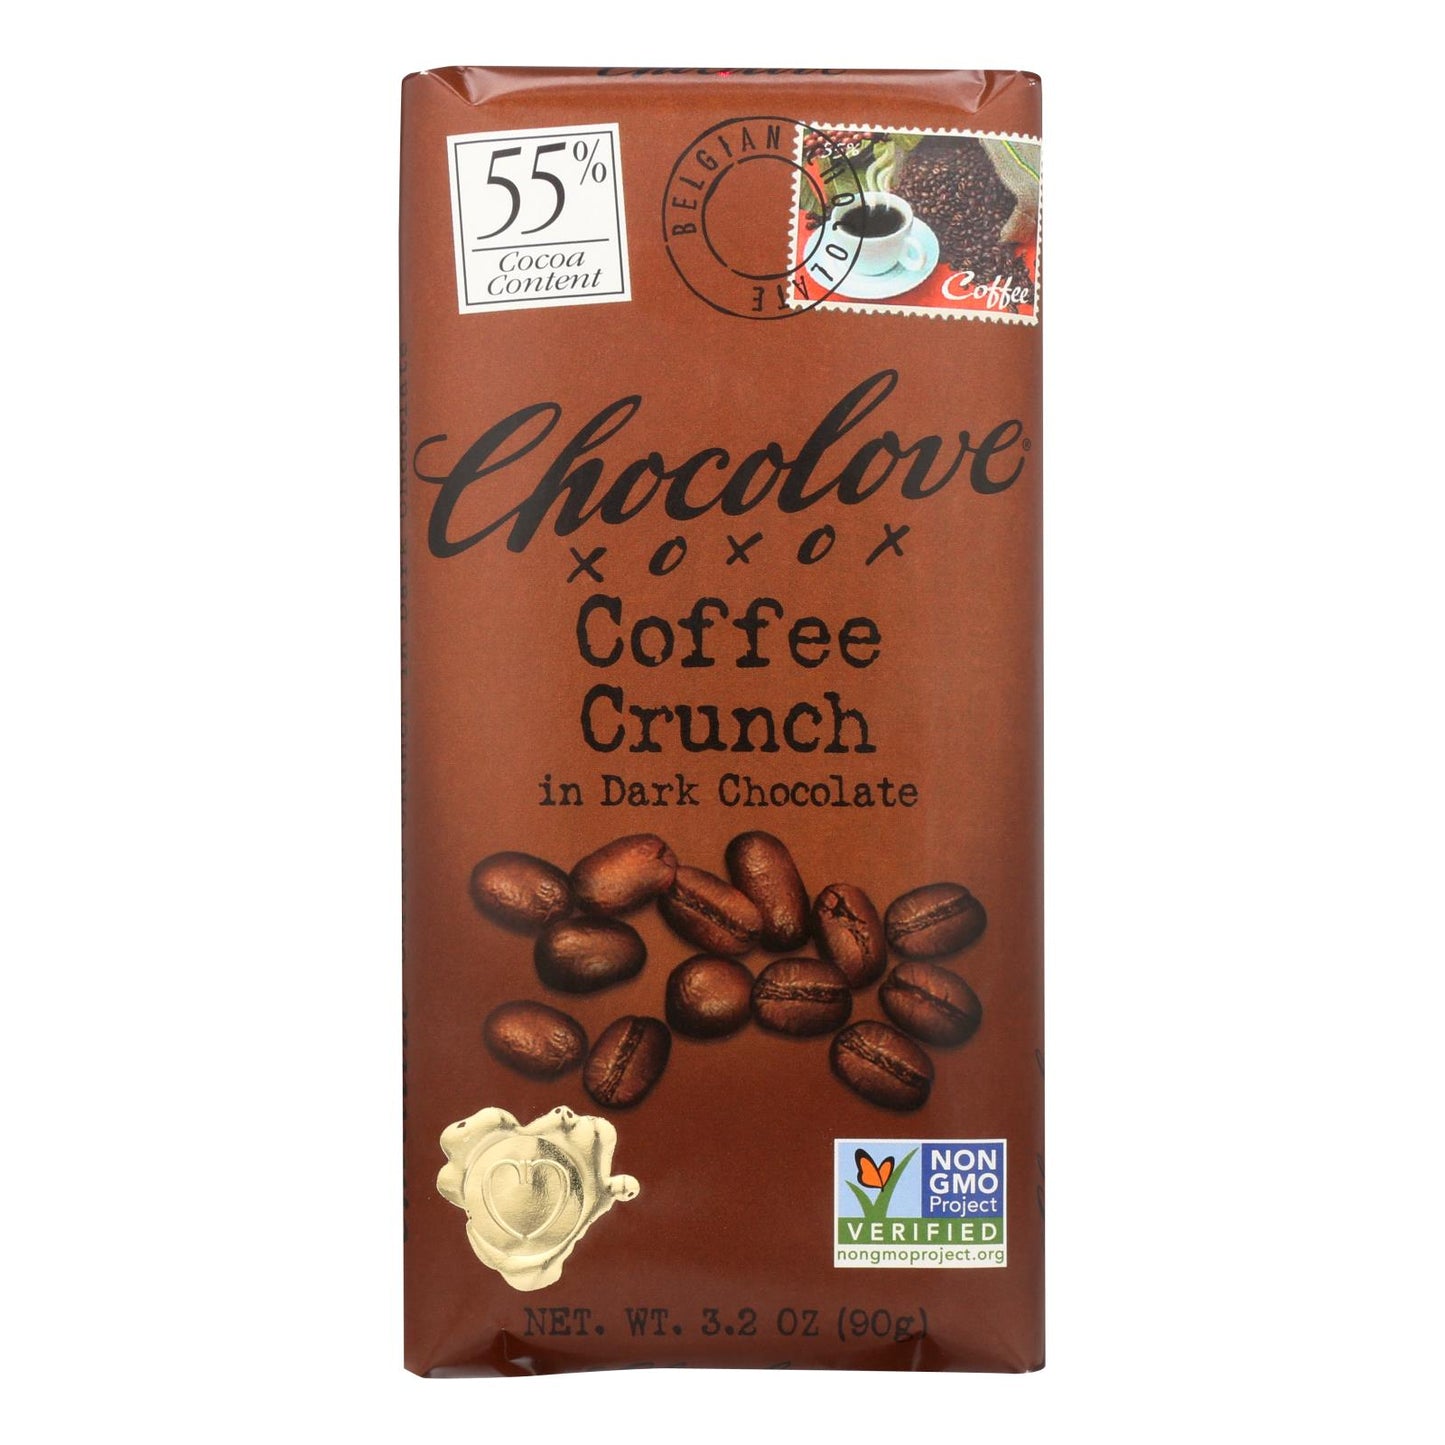 Chocolove Xoxox - Premium Chocolate Bar - Dark Chocolate - Coffee Crunch - 3.2 Oz Bars - Case Of 12